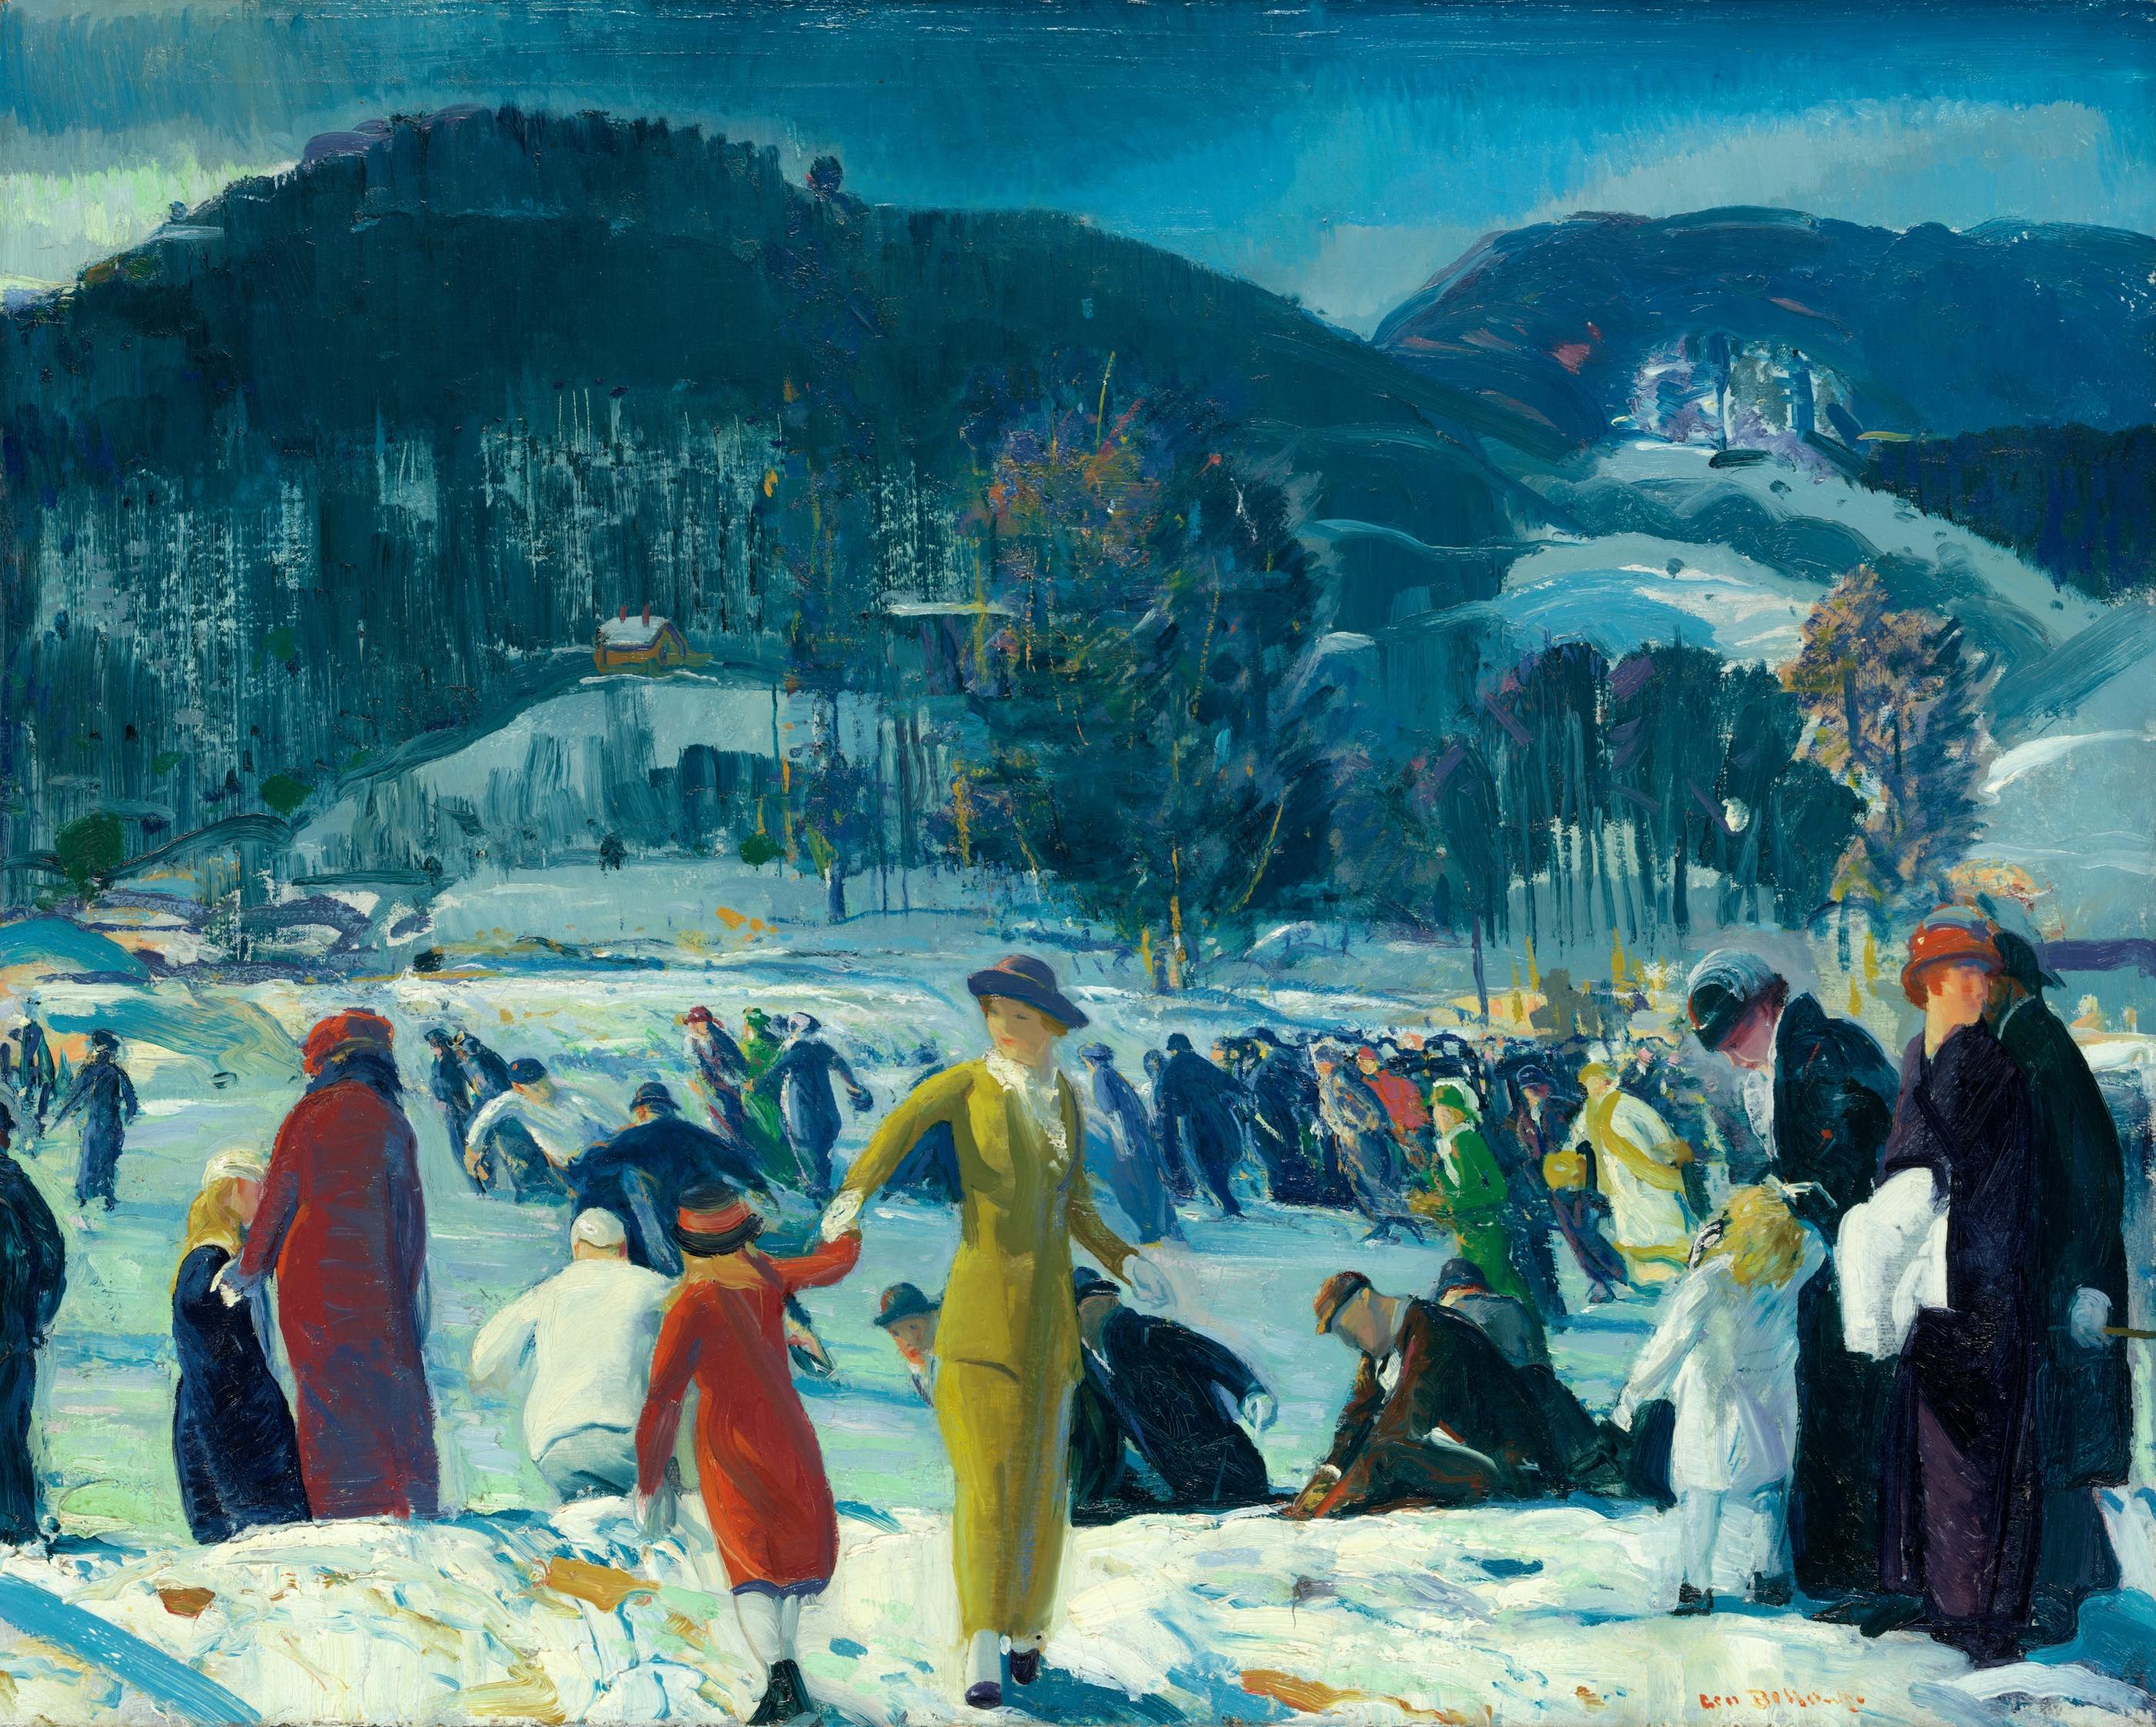 A tél szeretete by George Bellows - 1914 - 81,6 × 101,6 cm 